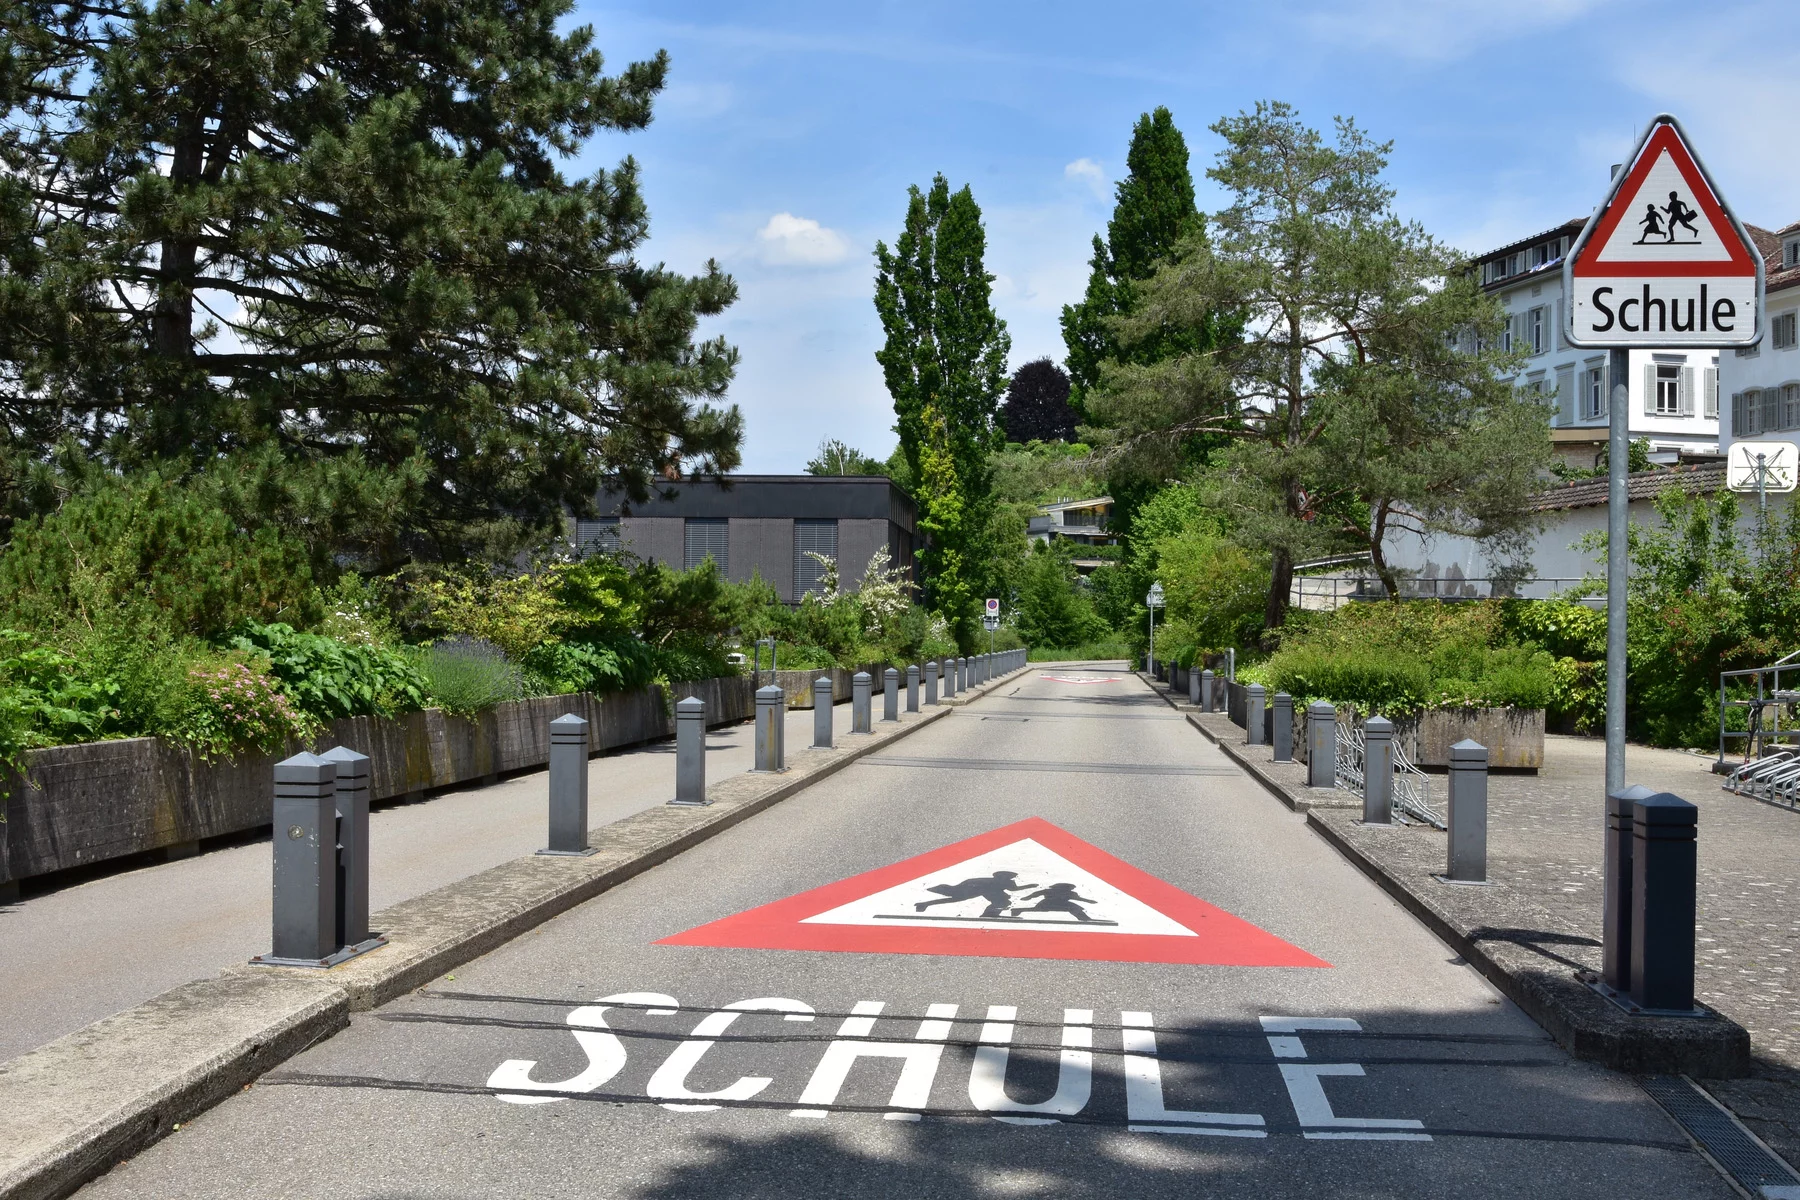 school road sign in German - schule